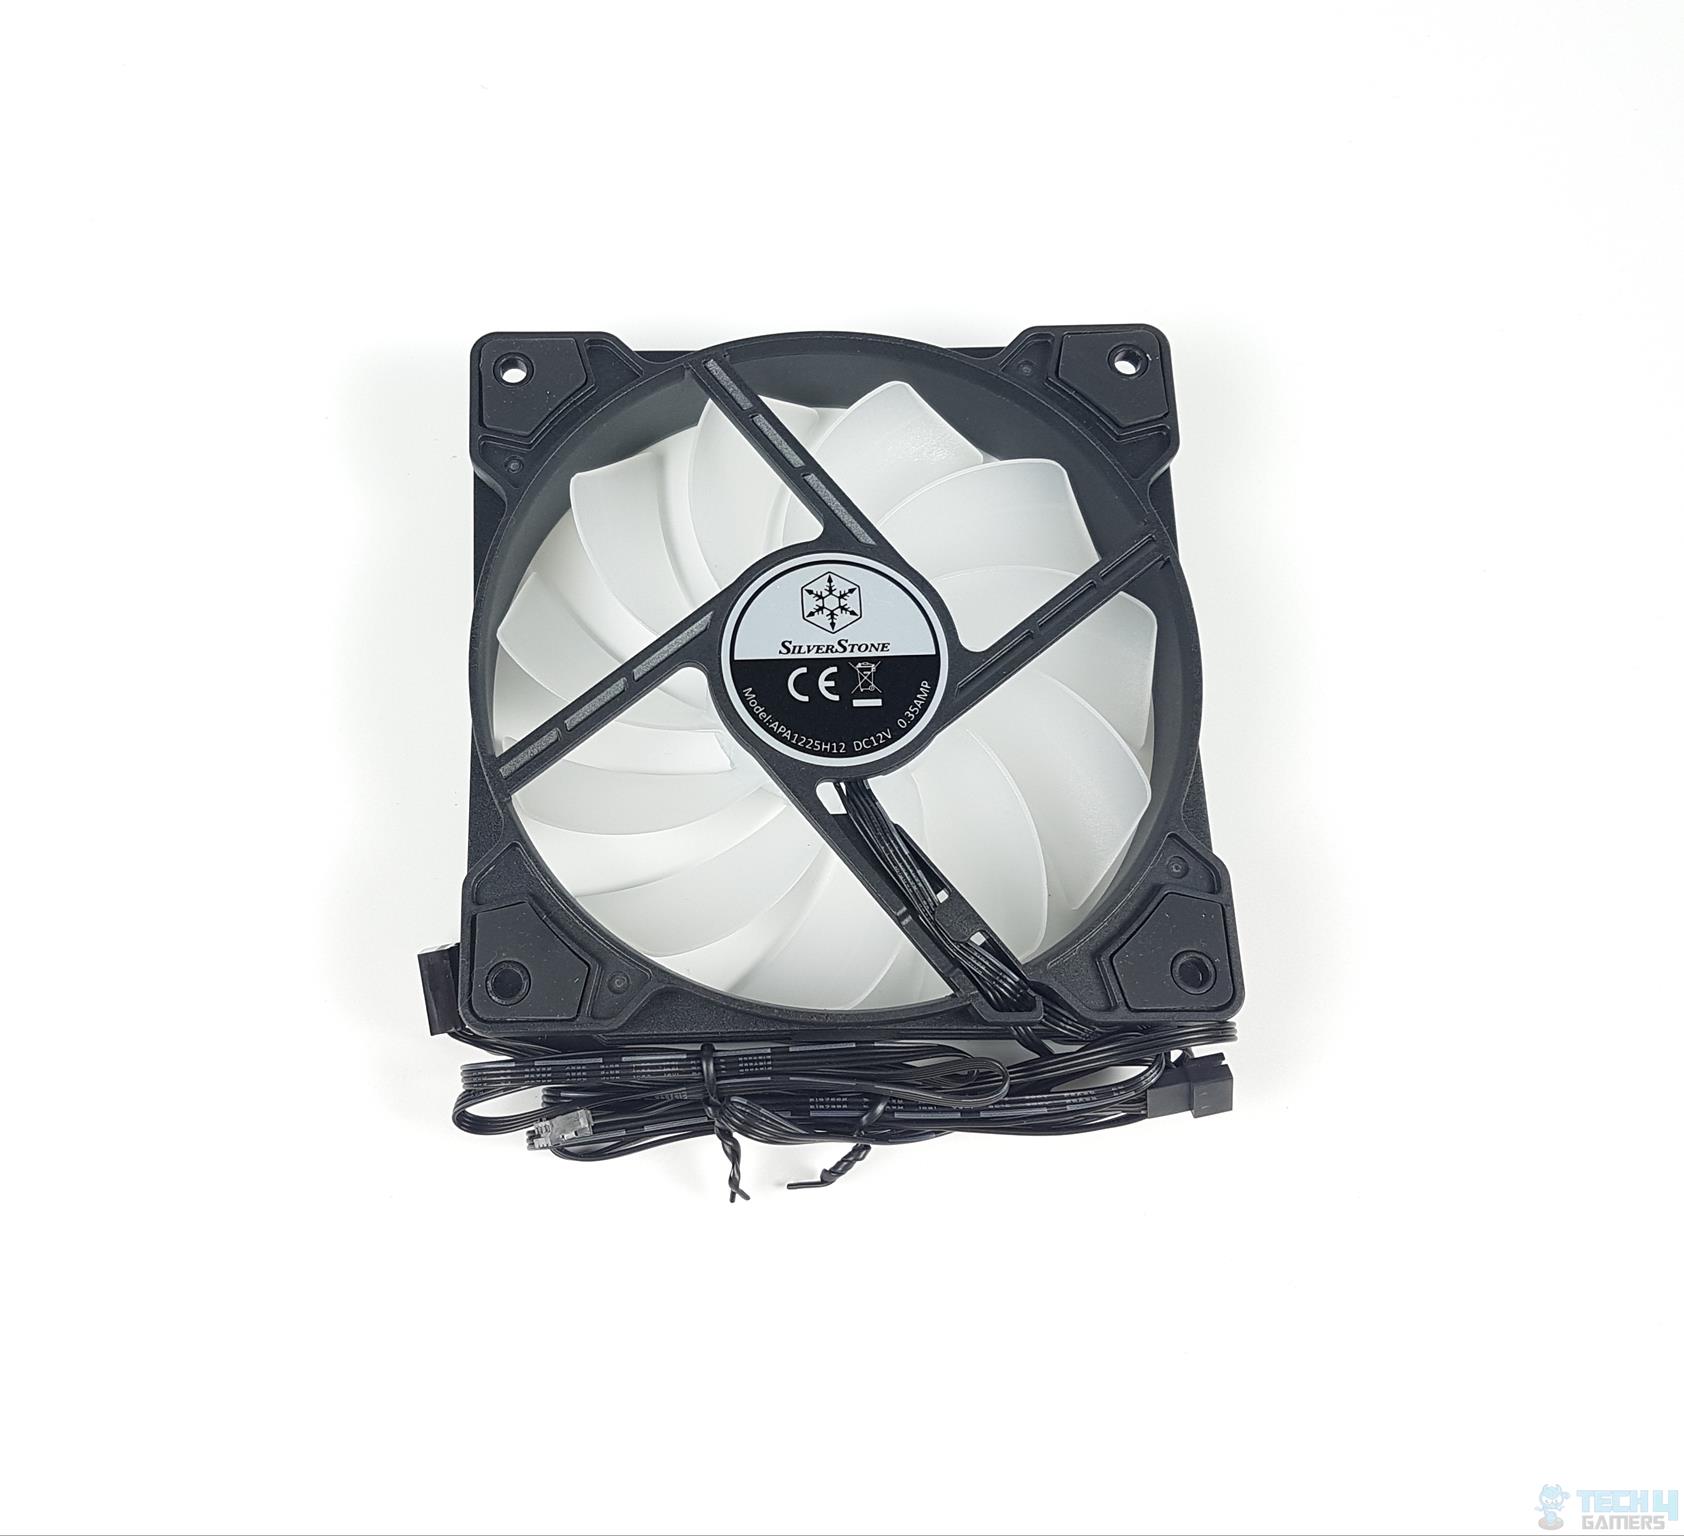 SilverStone iCEGEM 360 Liquid Cooler — The backside of the fan